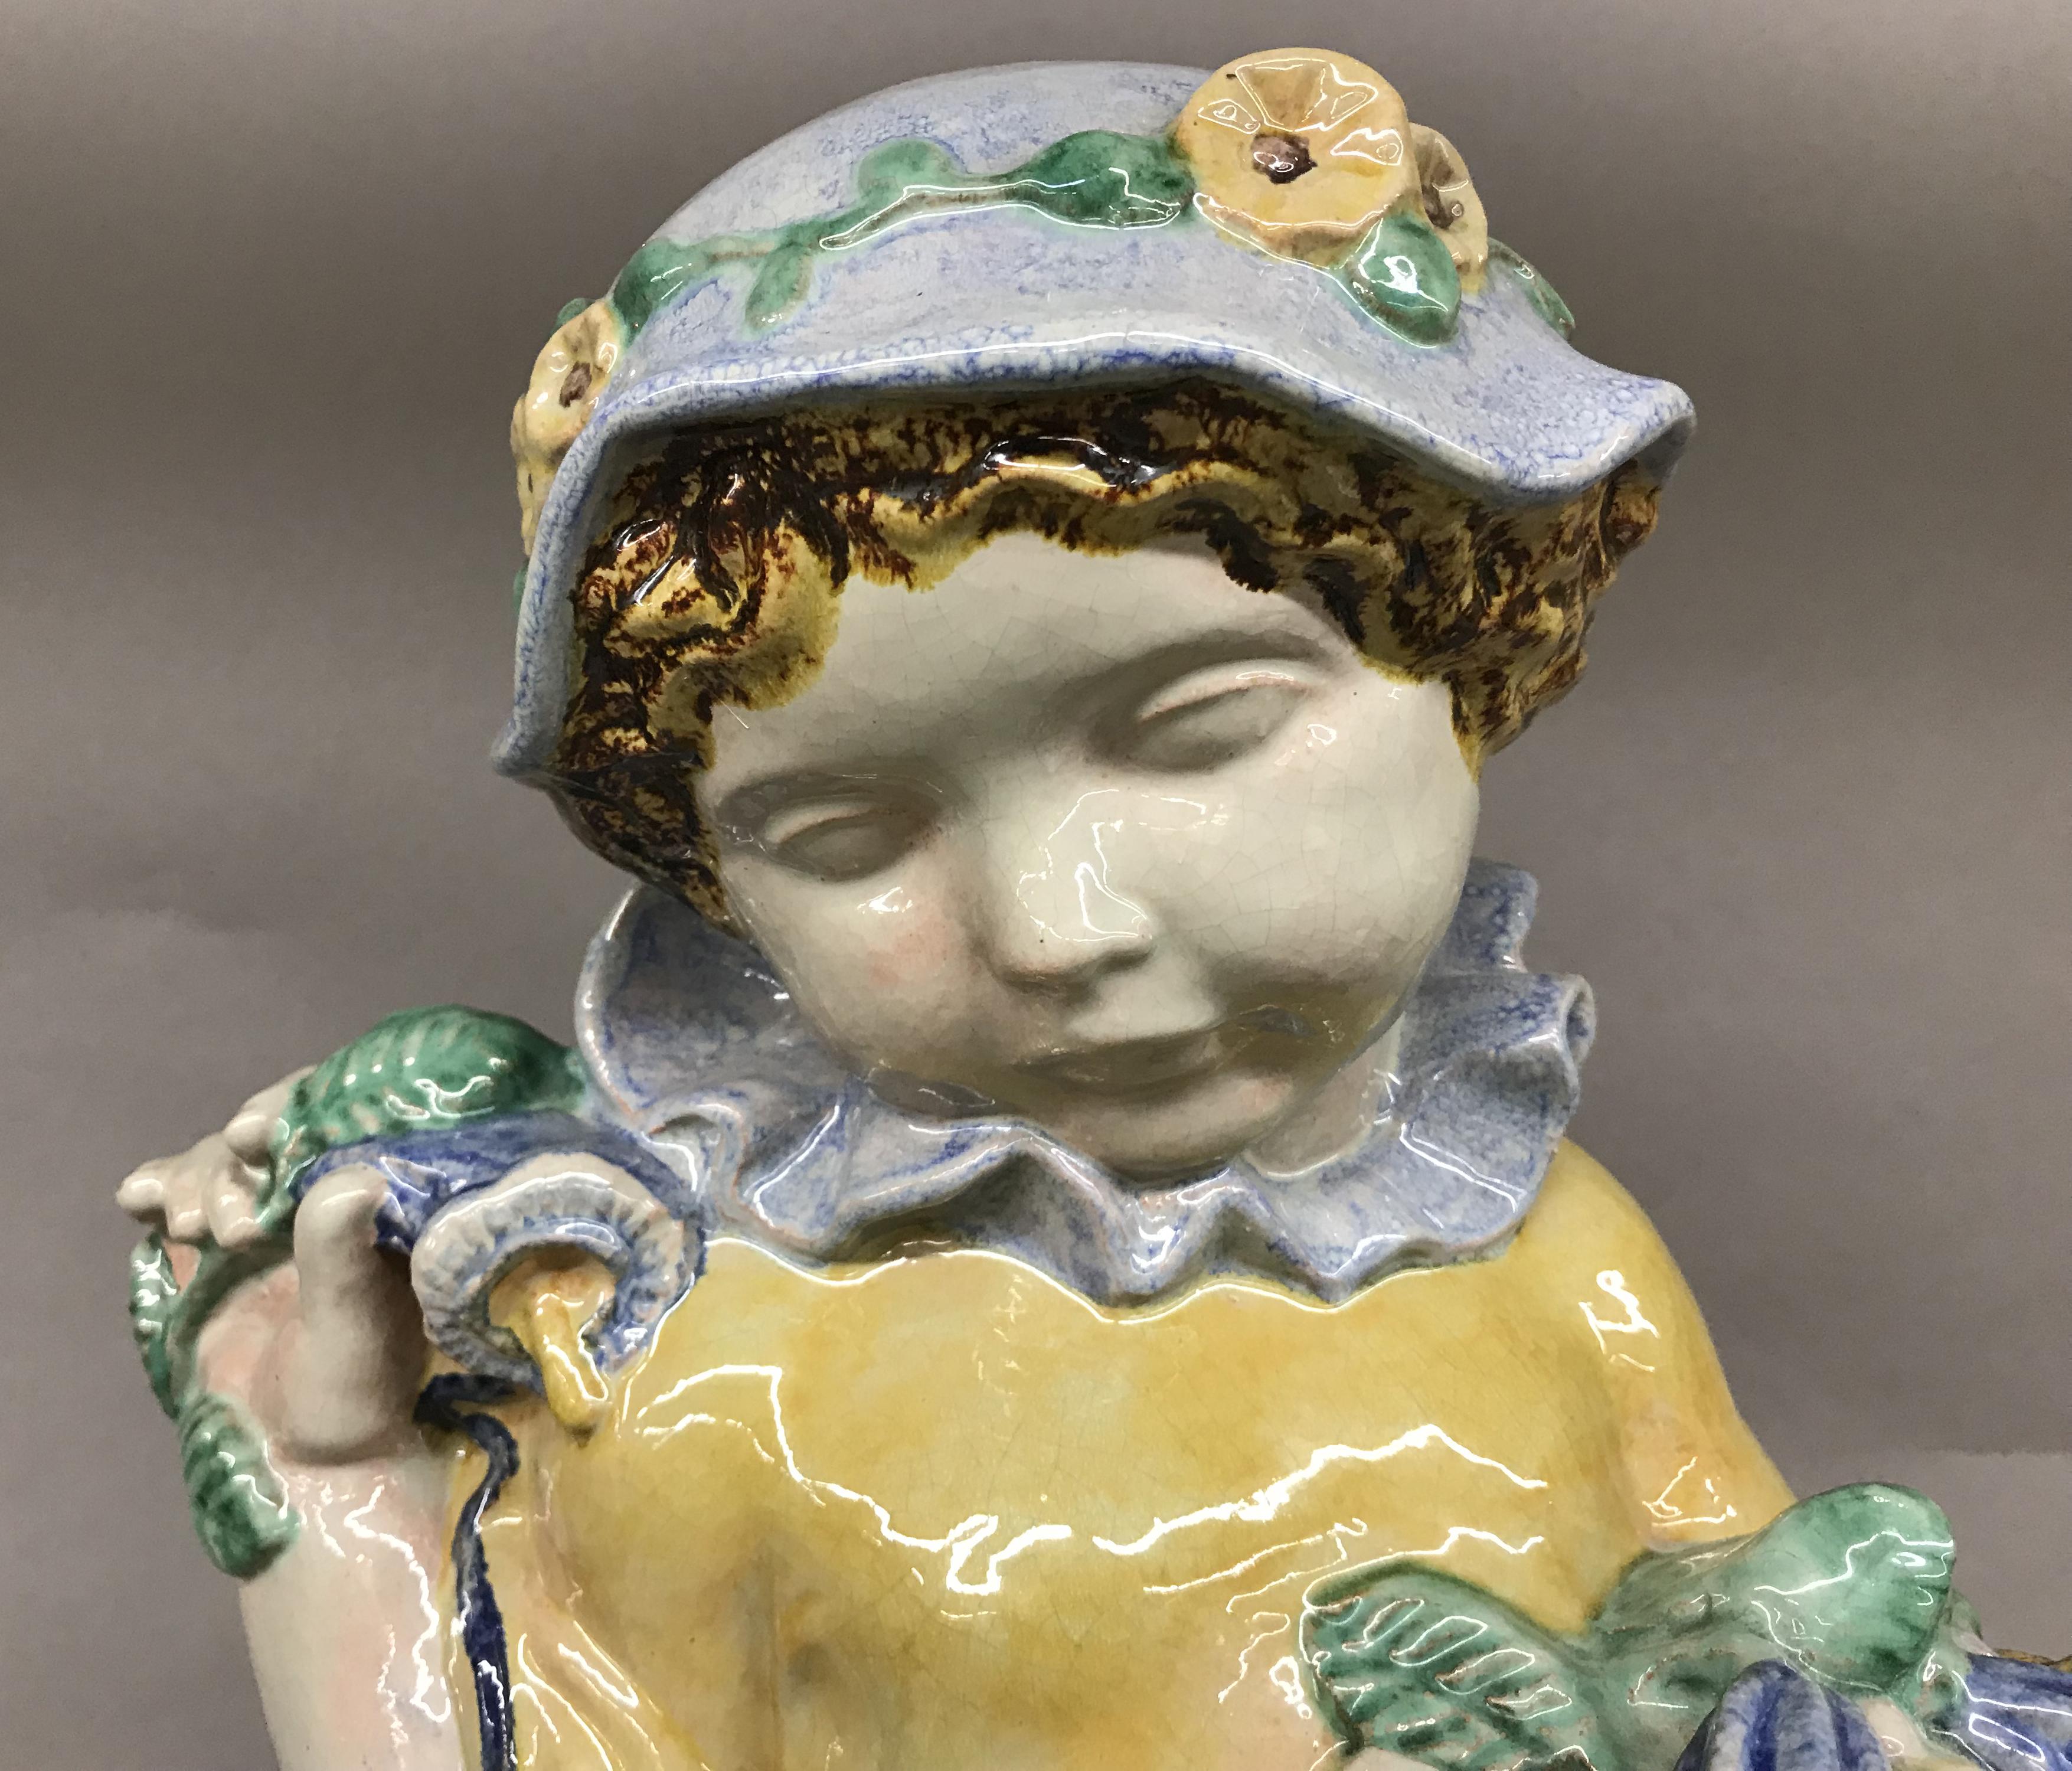 Art Nouveau Michael Powolny Austrian Ceramic Sculpture of Putto with Flowers, “Summer” For Sale